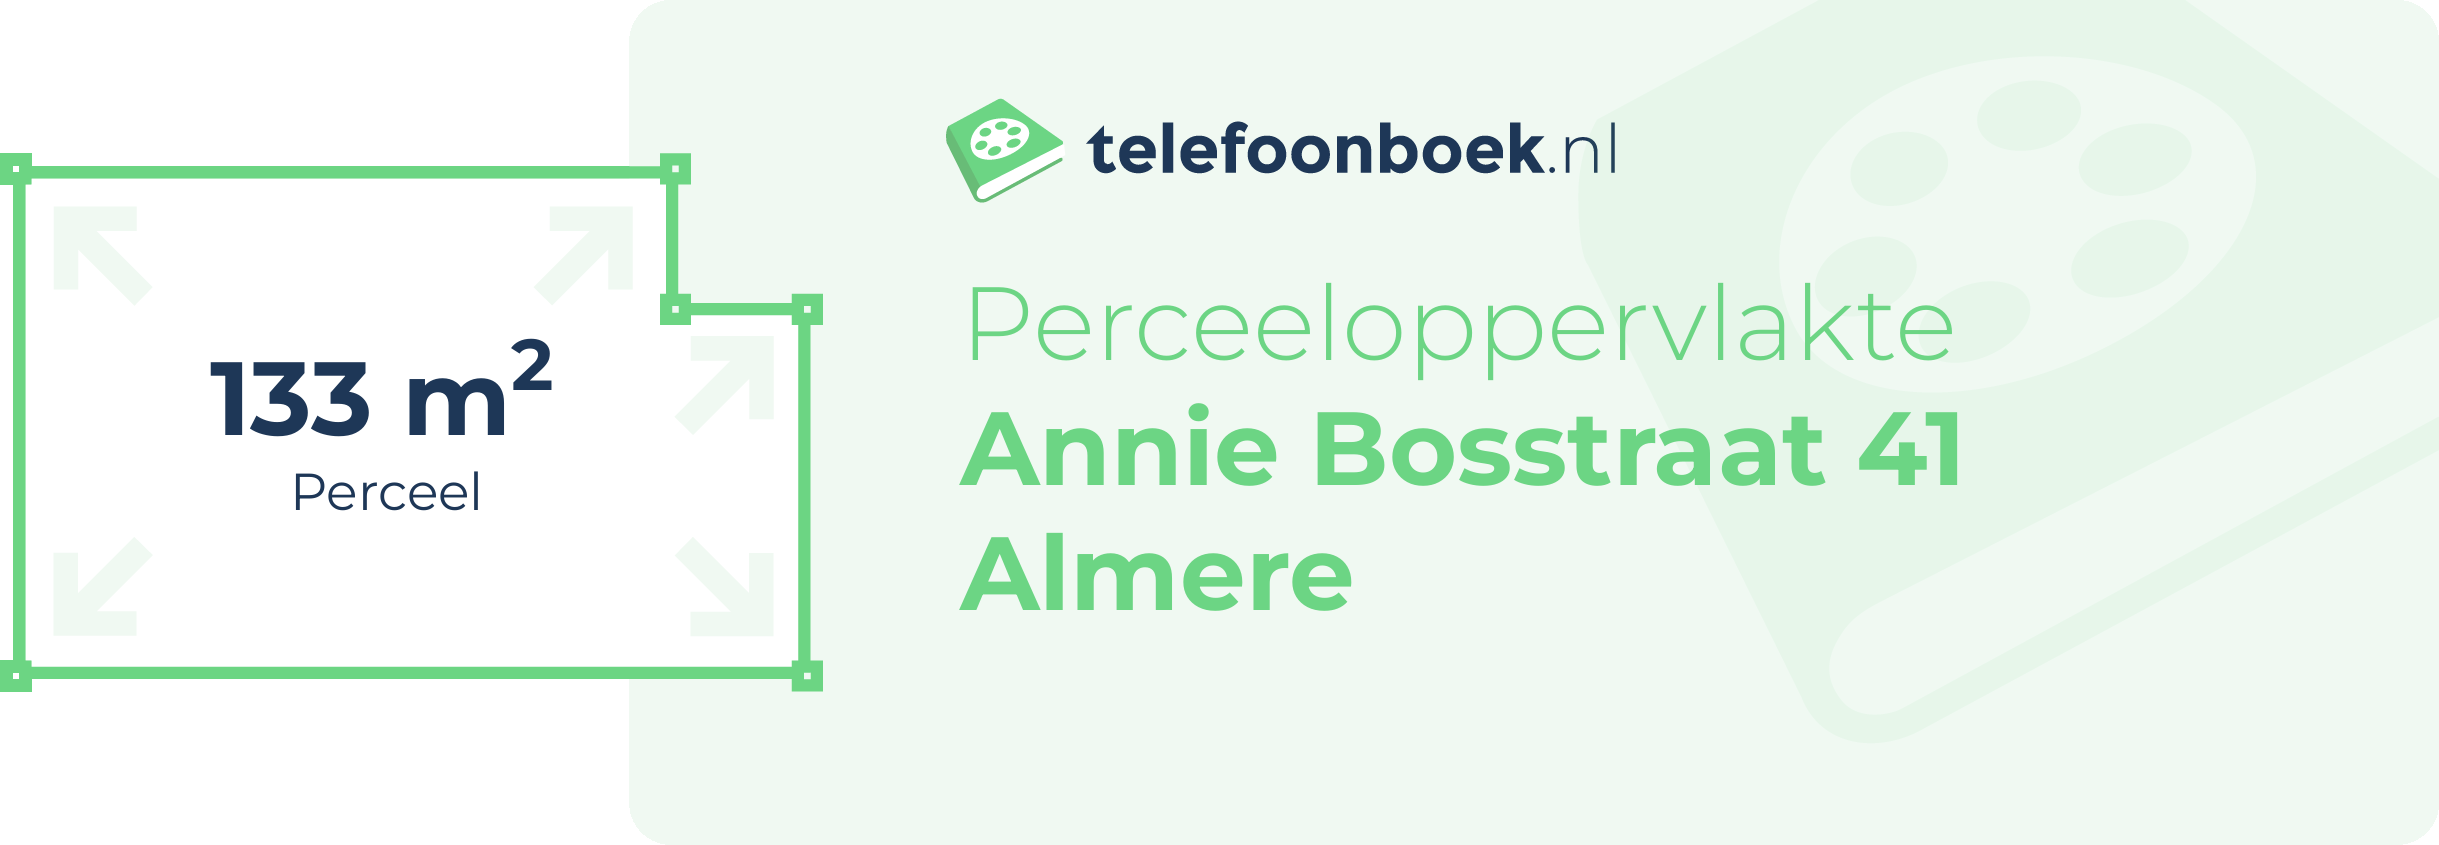 Perceeloppervlakte Annie Bosstraat 41 Almere